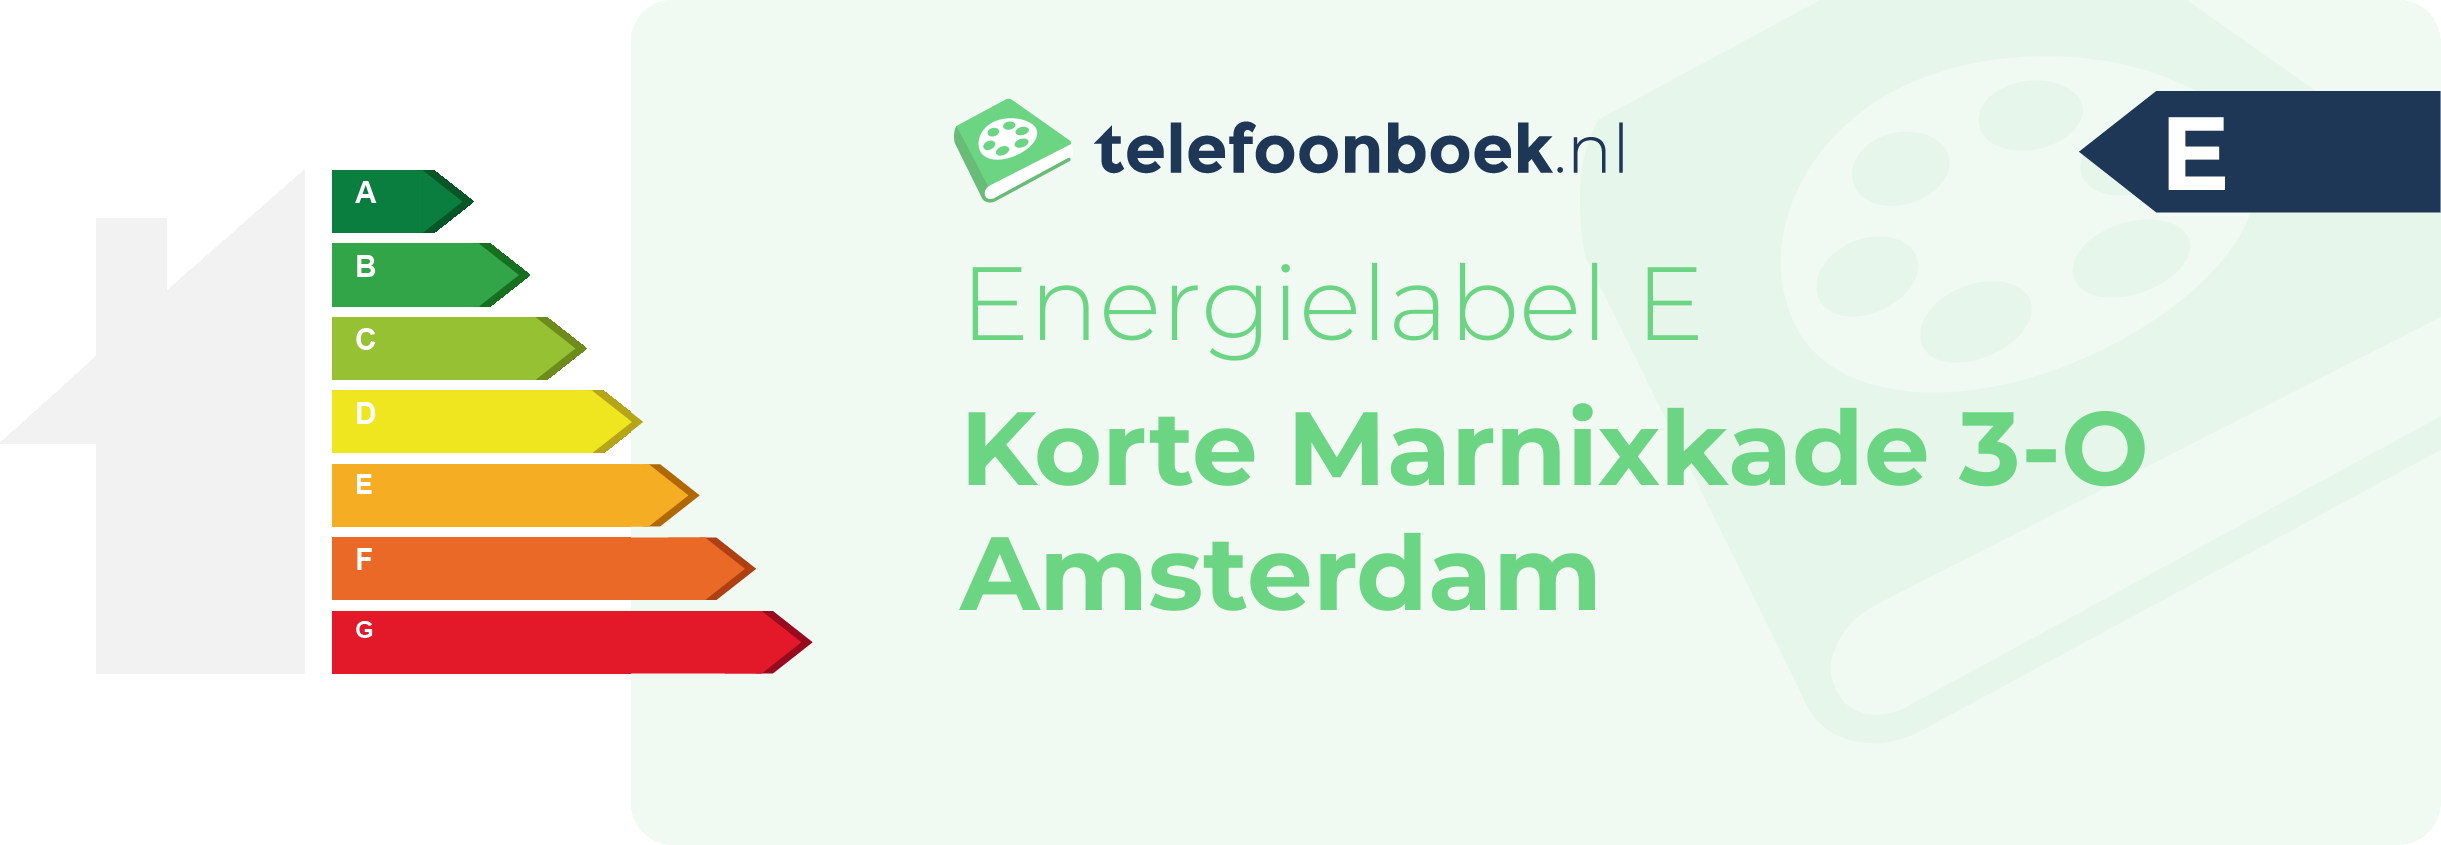 Energielabel Korte Marnixkade 3-O Amsterdam